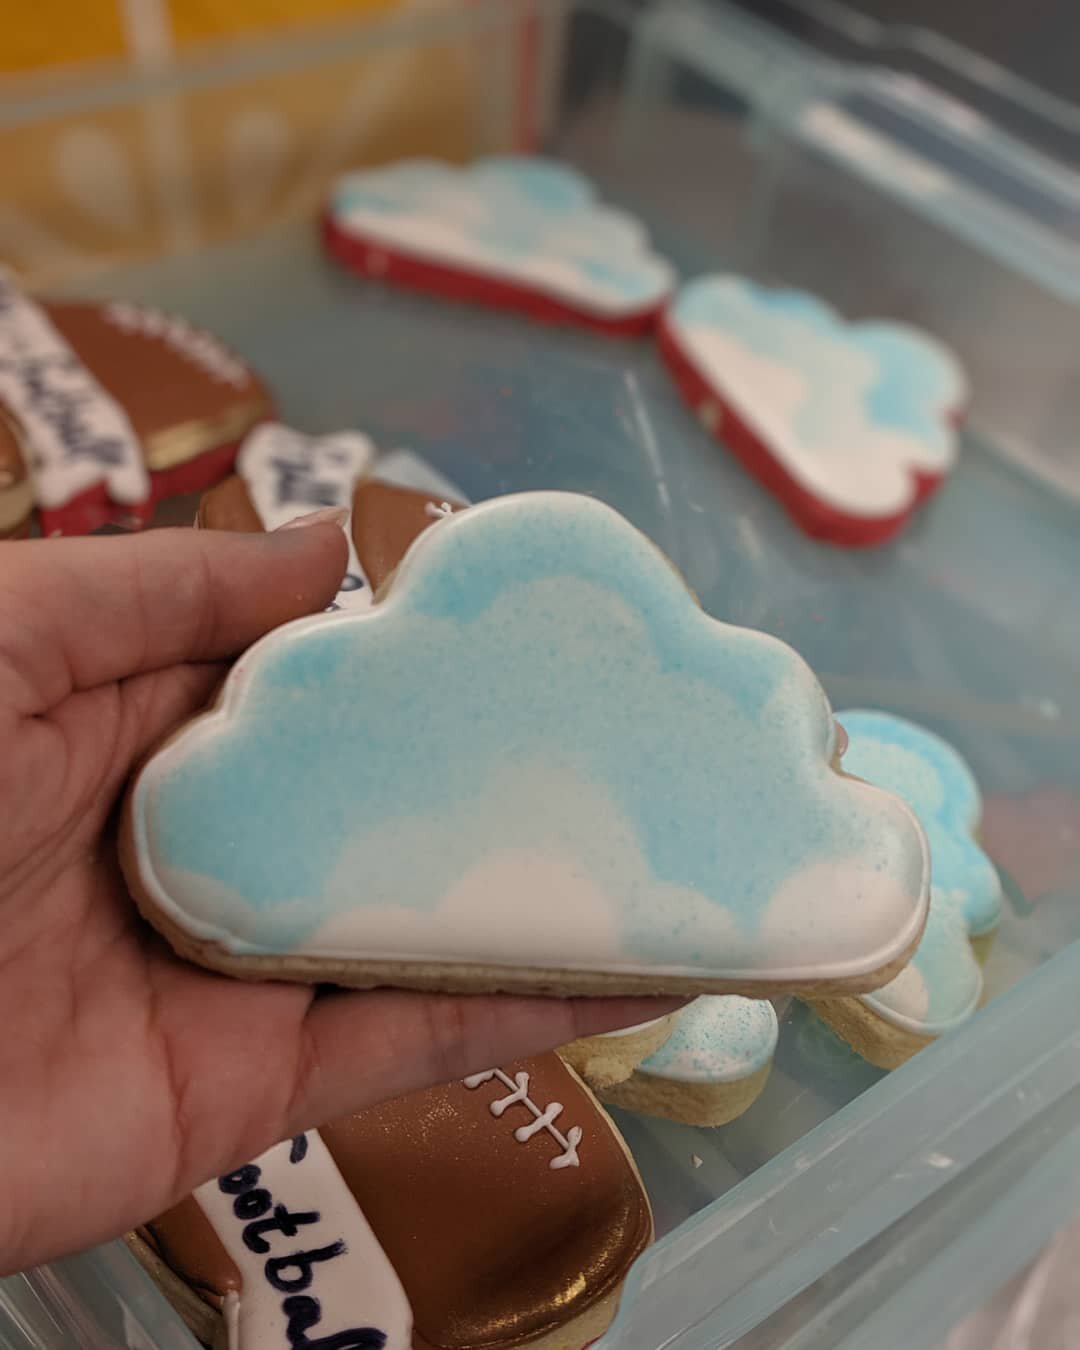 Some clouds on a cloudy day ☁️☁️☁️ #sugarcookiesofinstagram #cookiedecorating #cookiesofinstagram #royalicing